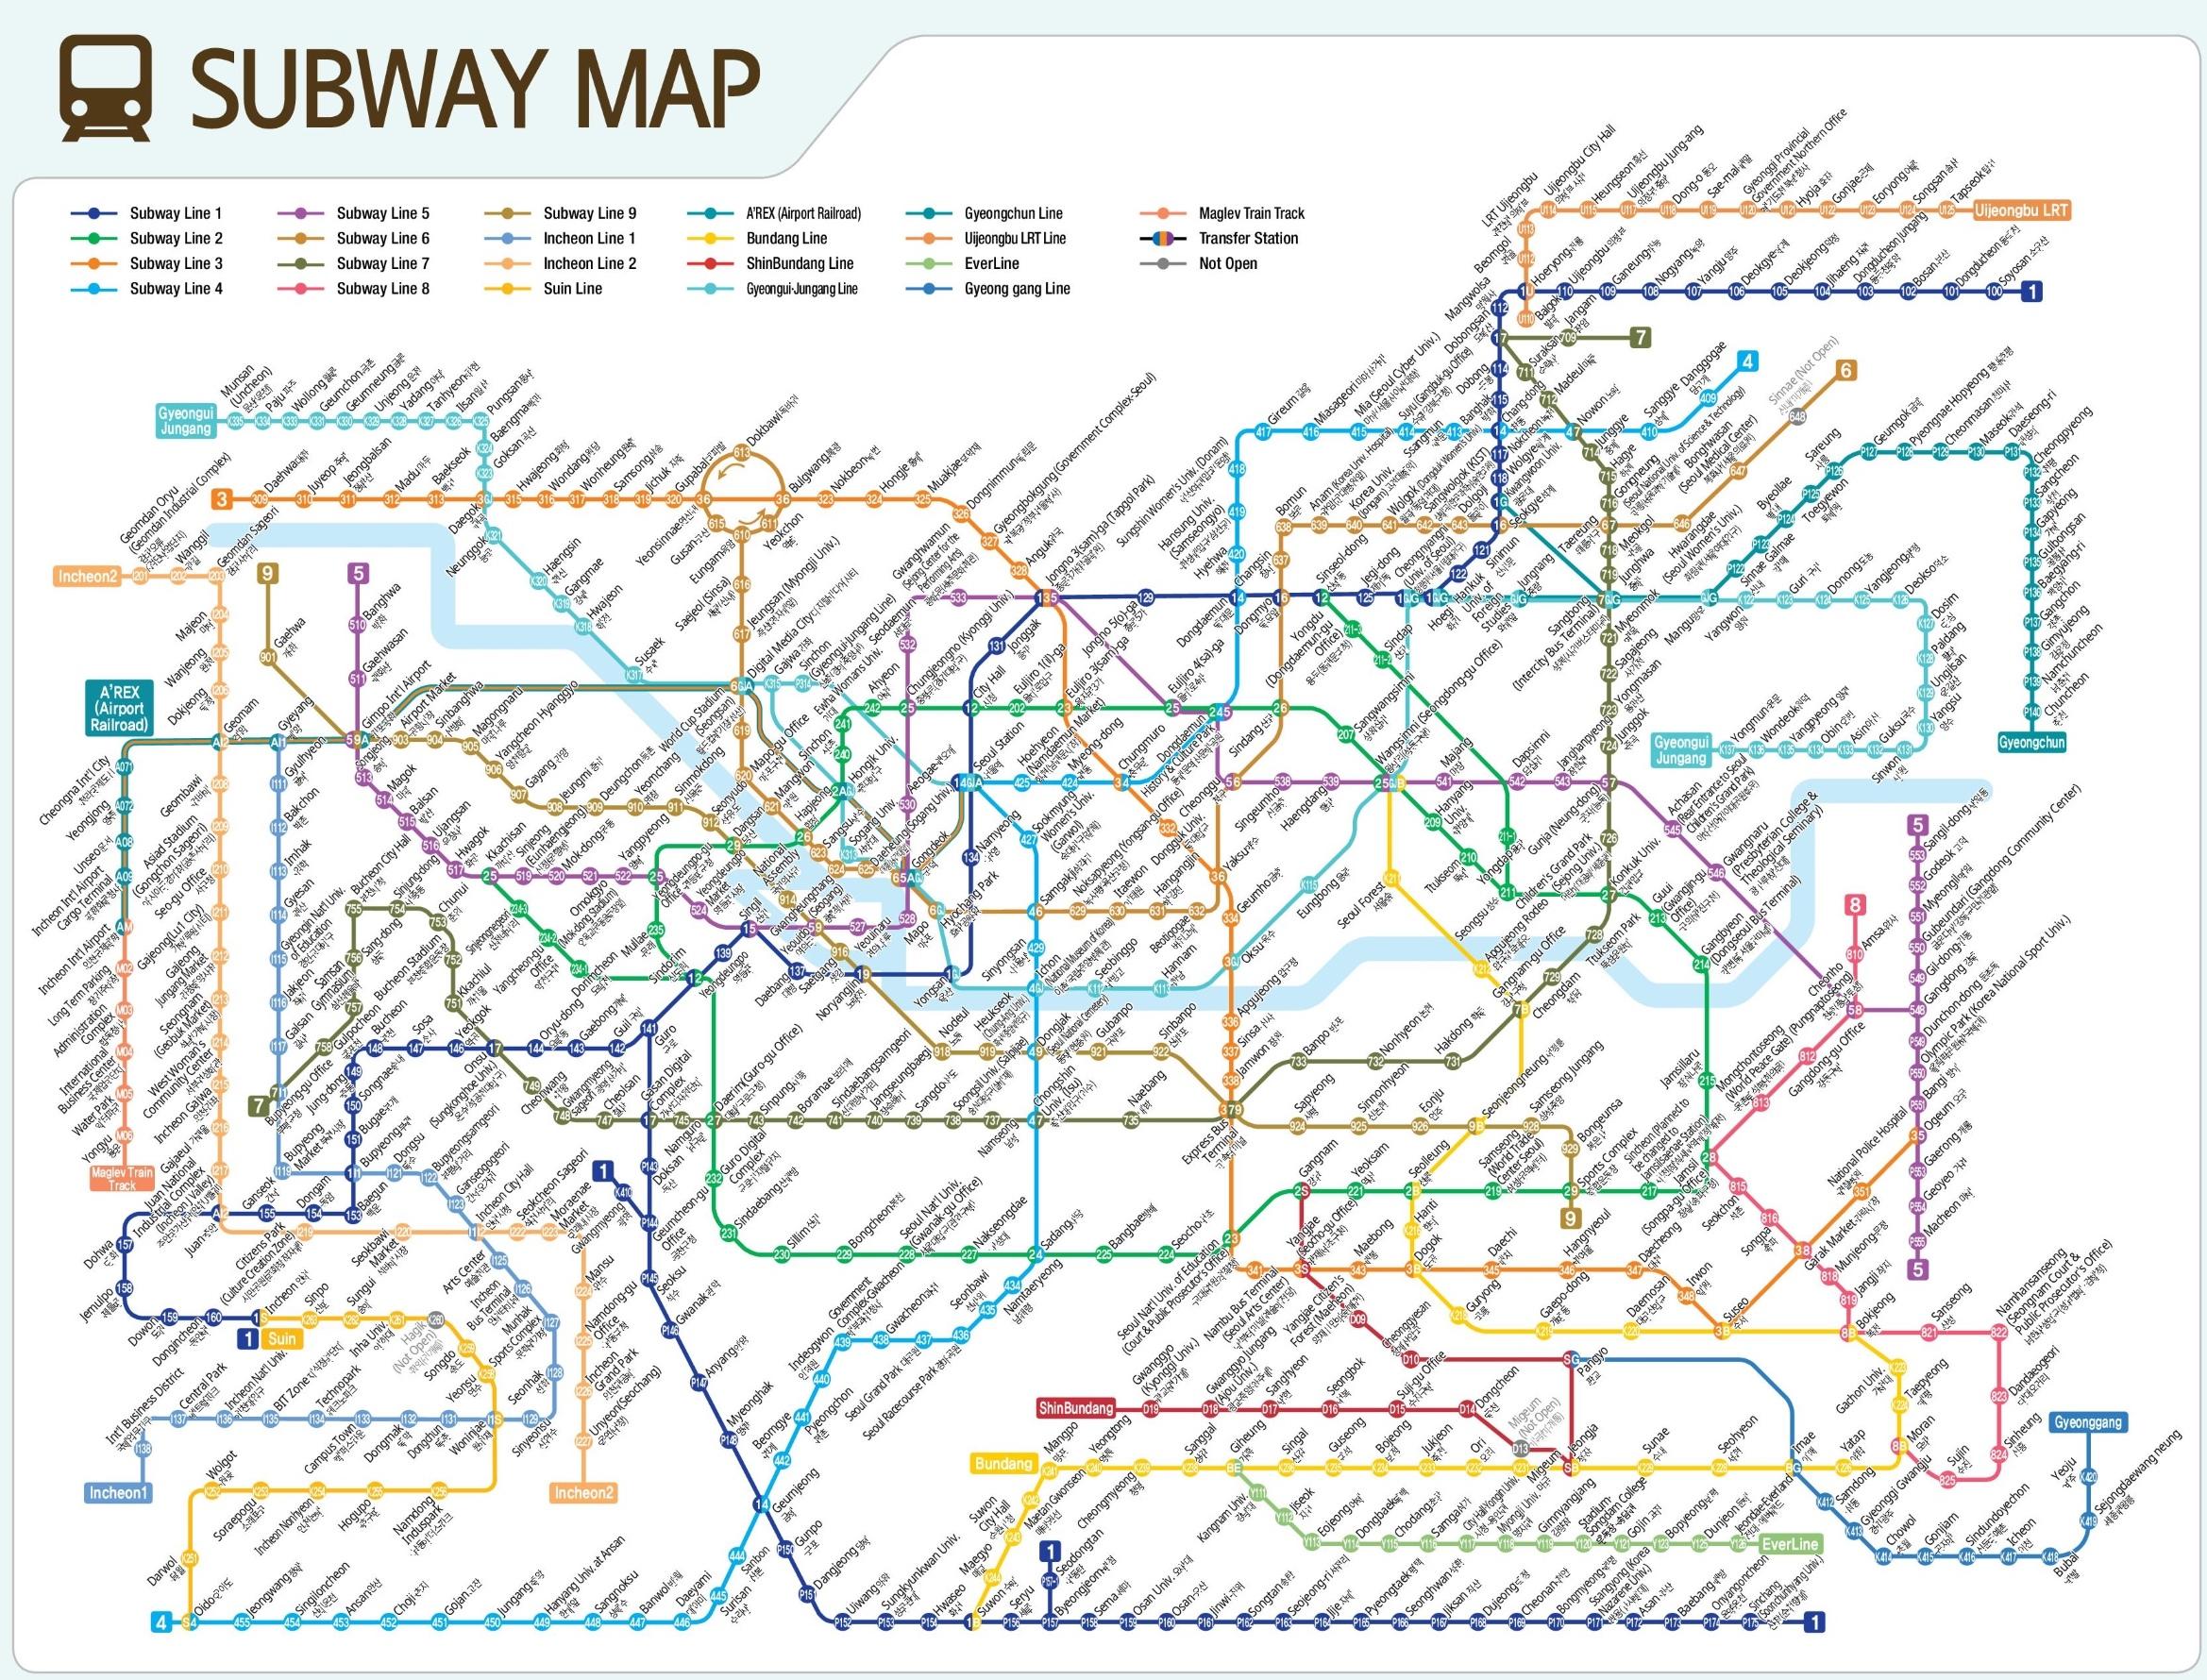 Seoul Metro Map 